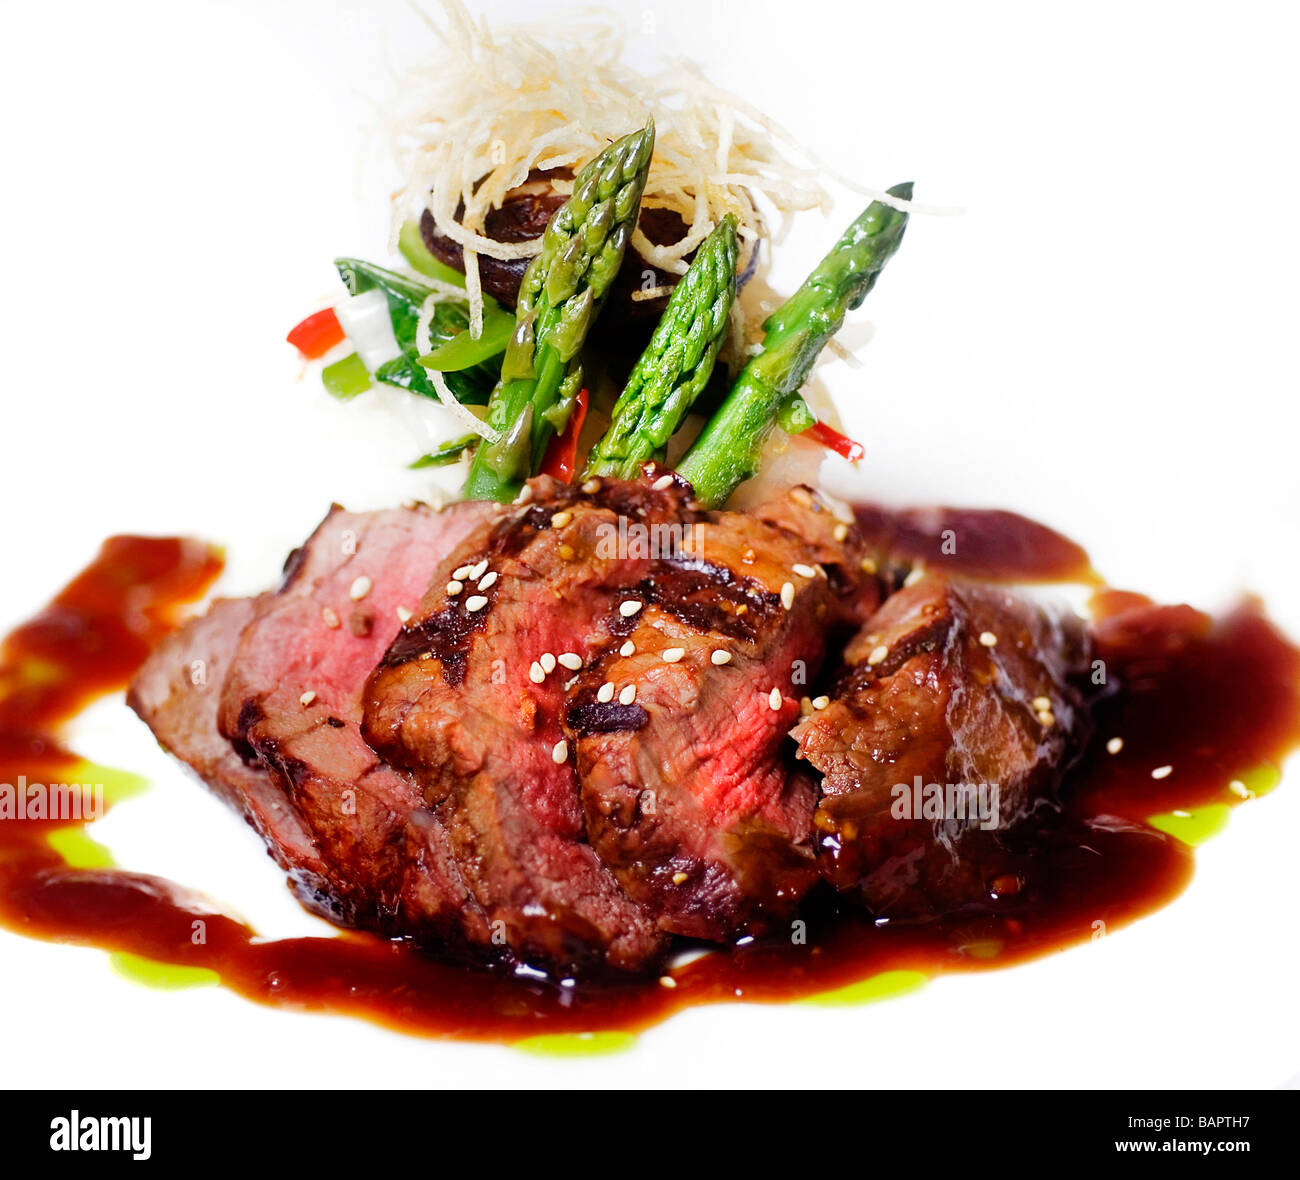 A gourmet fillet mignon steak at five star restaurant. Stock Photo